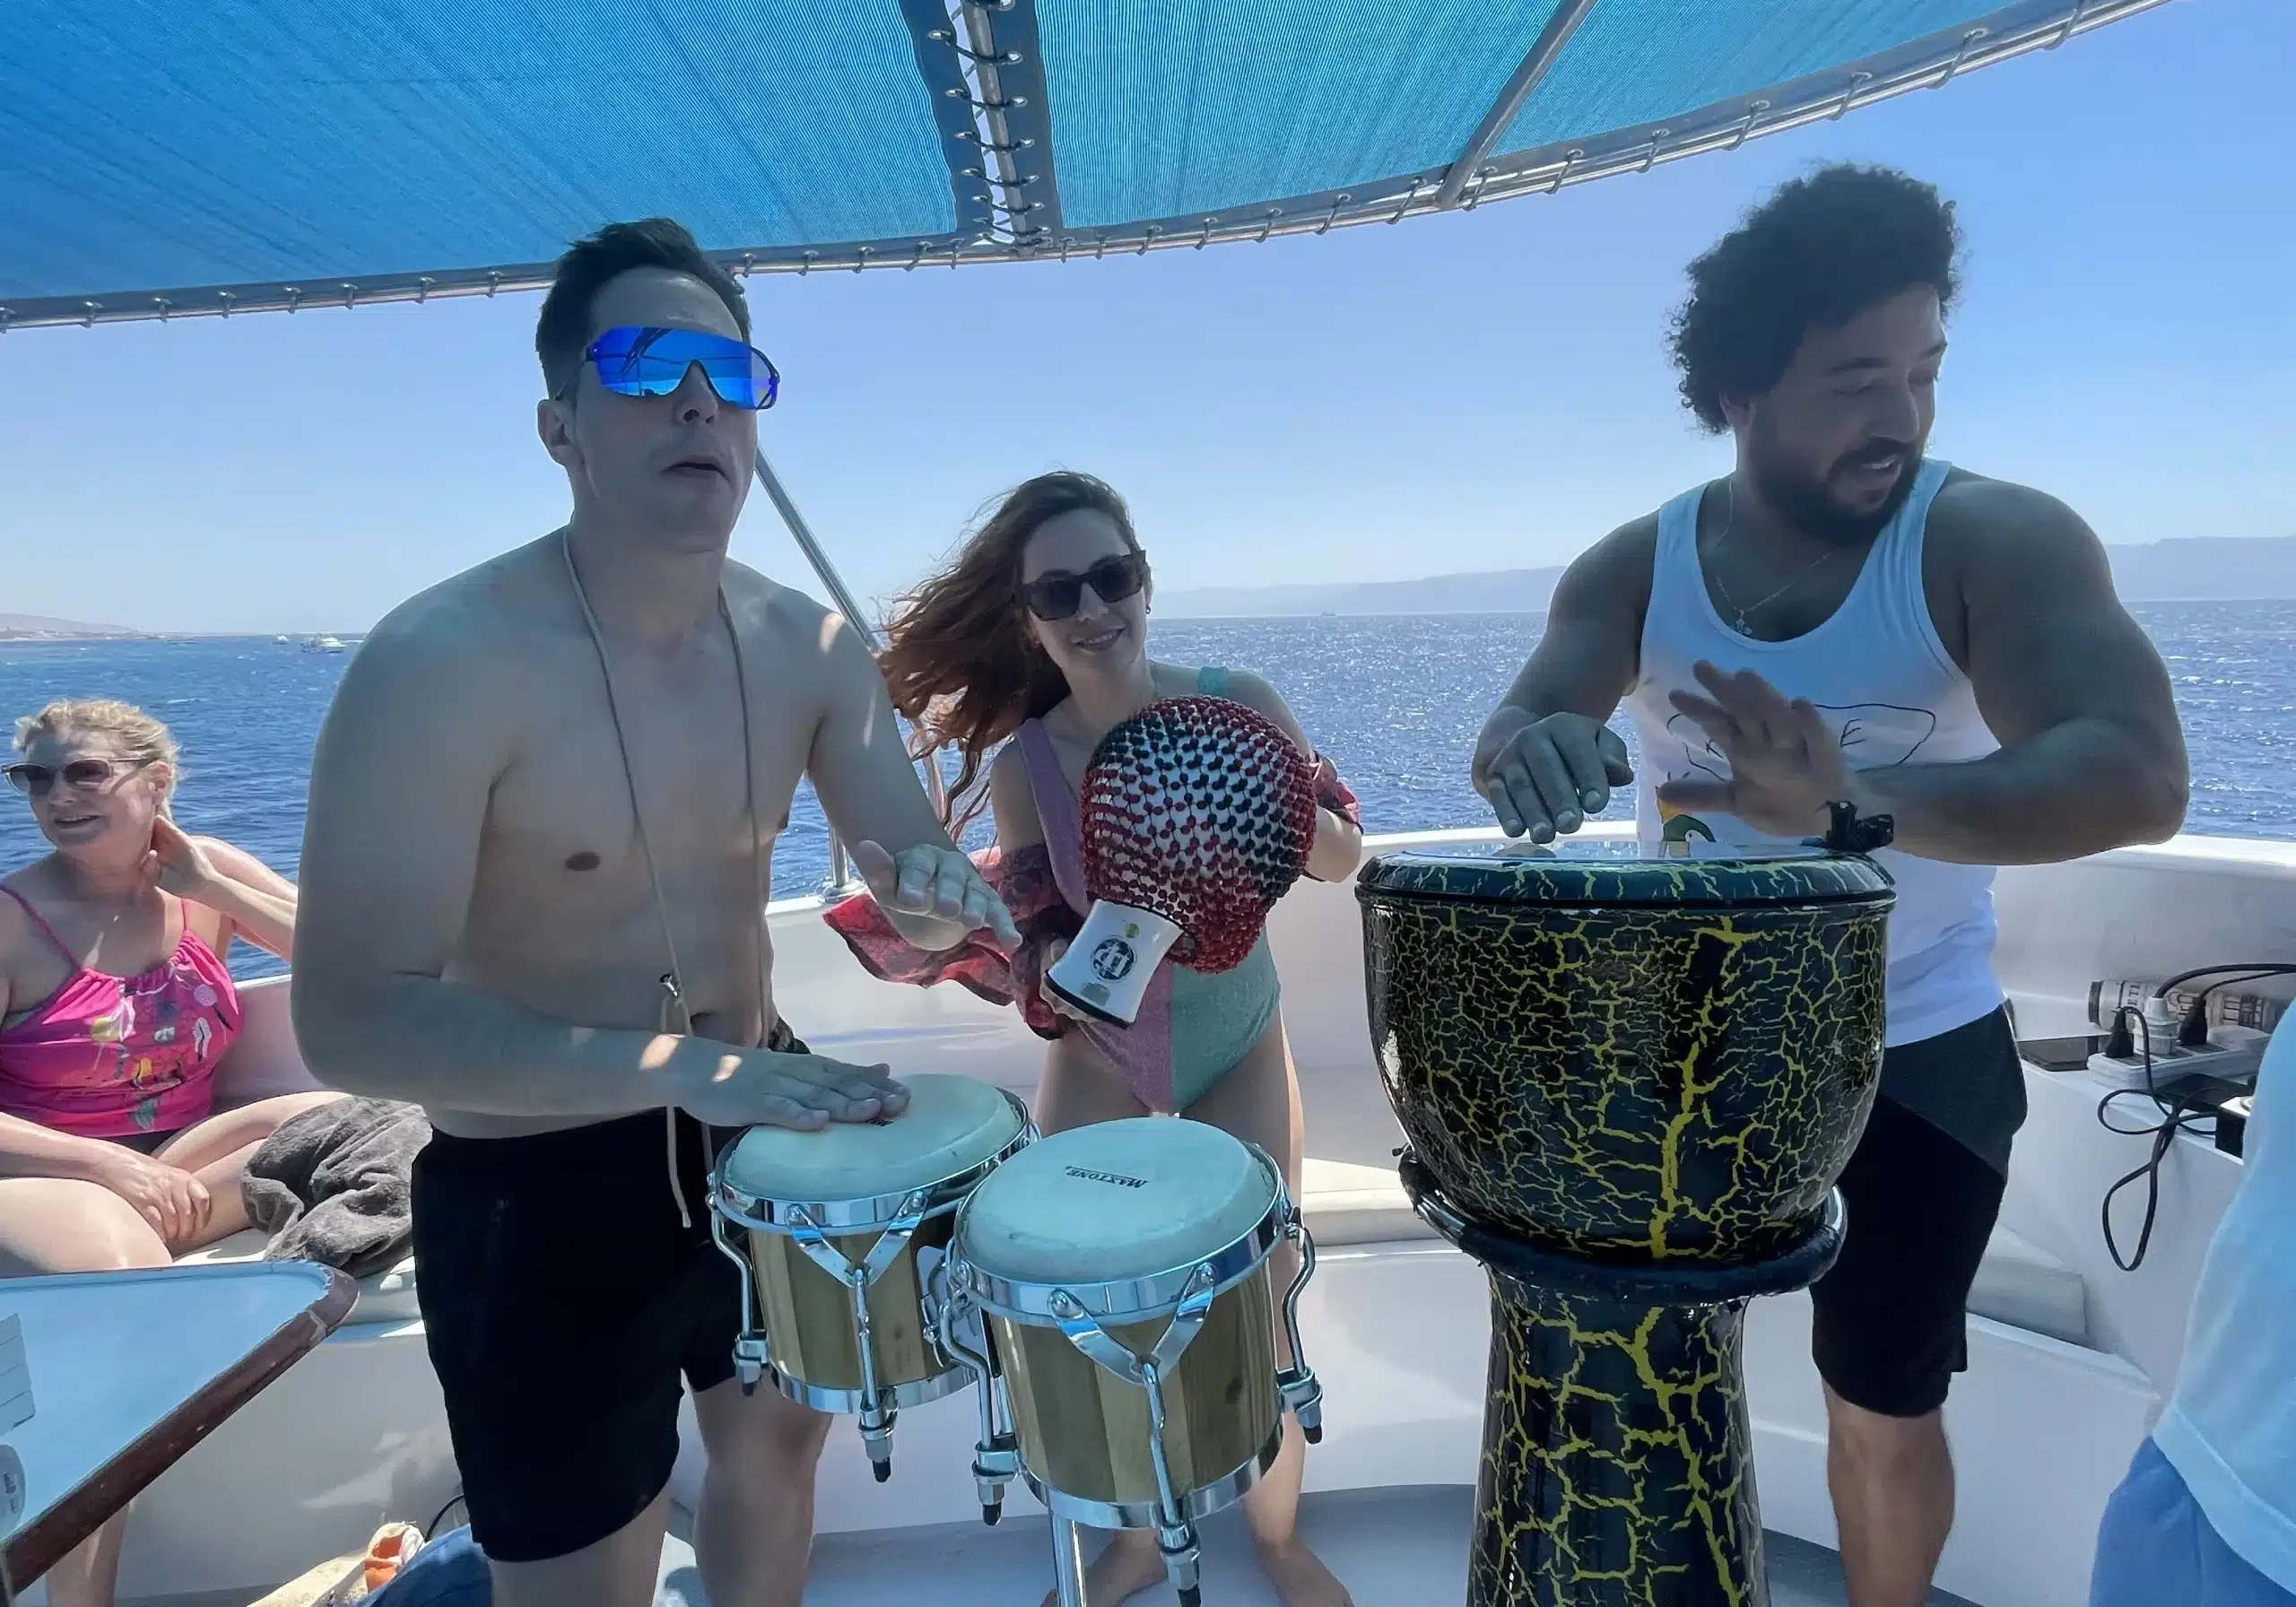 drummer-on-boat-in-aqaba